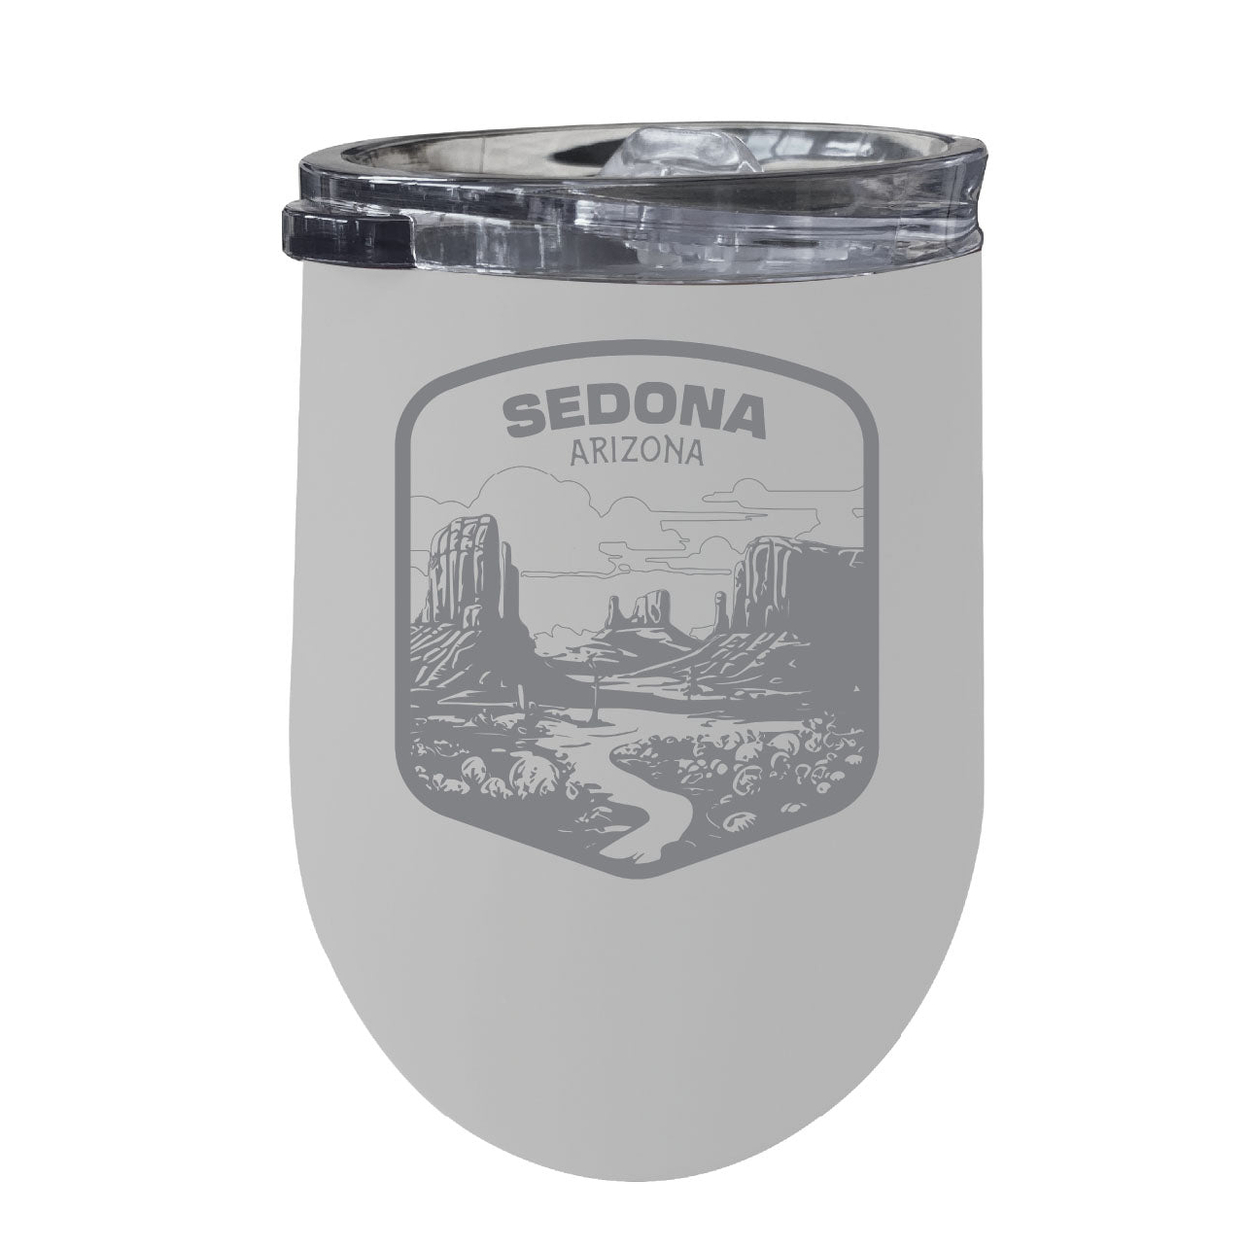 Sedona Arizona Souvenir 12 Oz Engraved Insulated Wine Stainless Steel Tumbler - Seafoam,,Single Unit